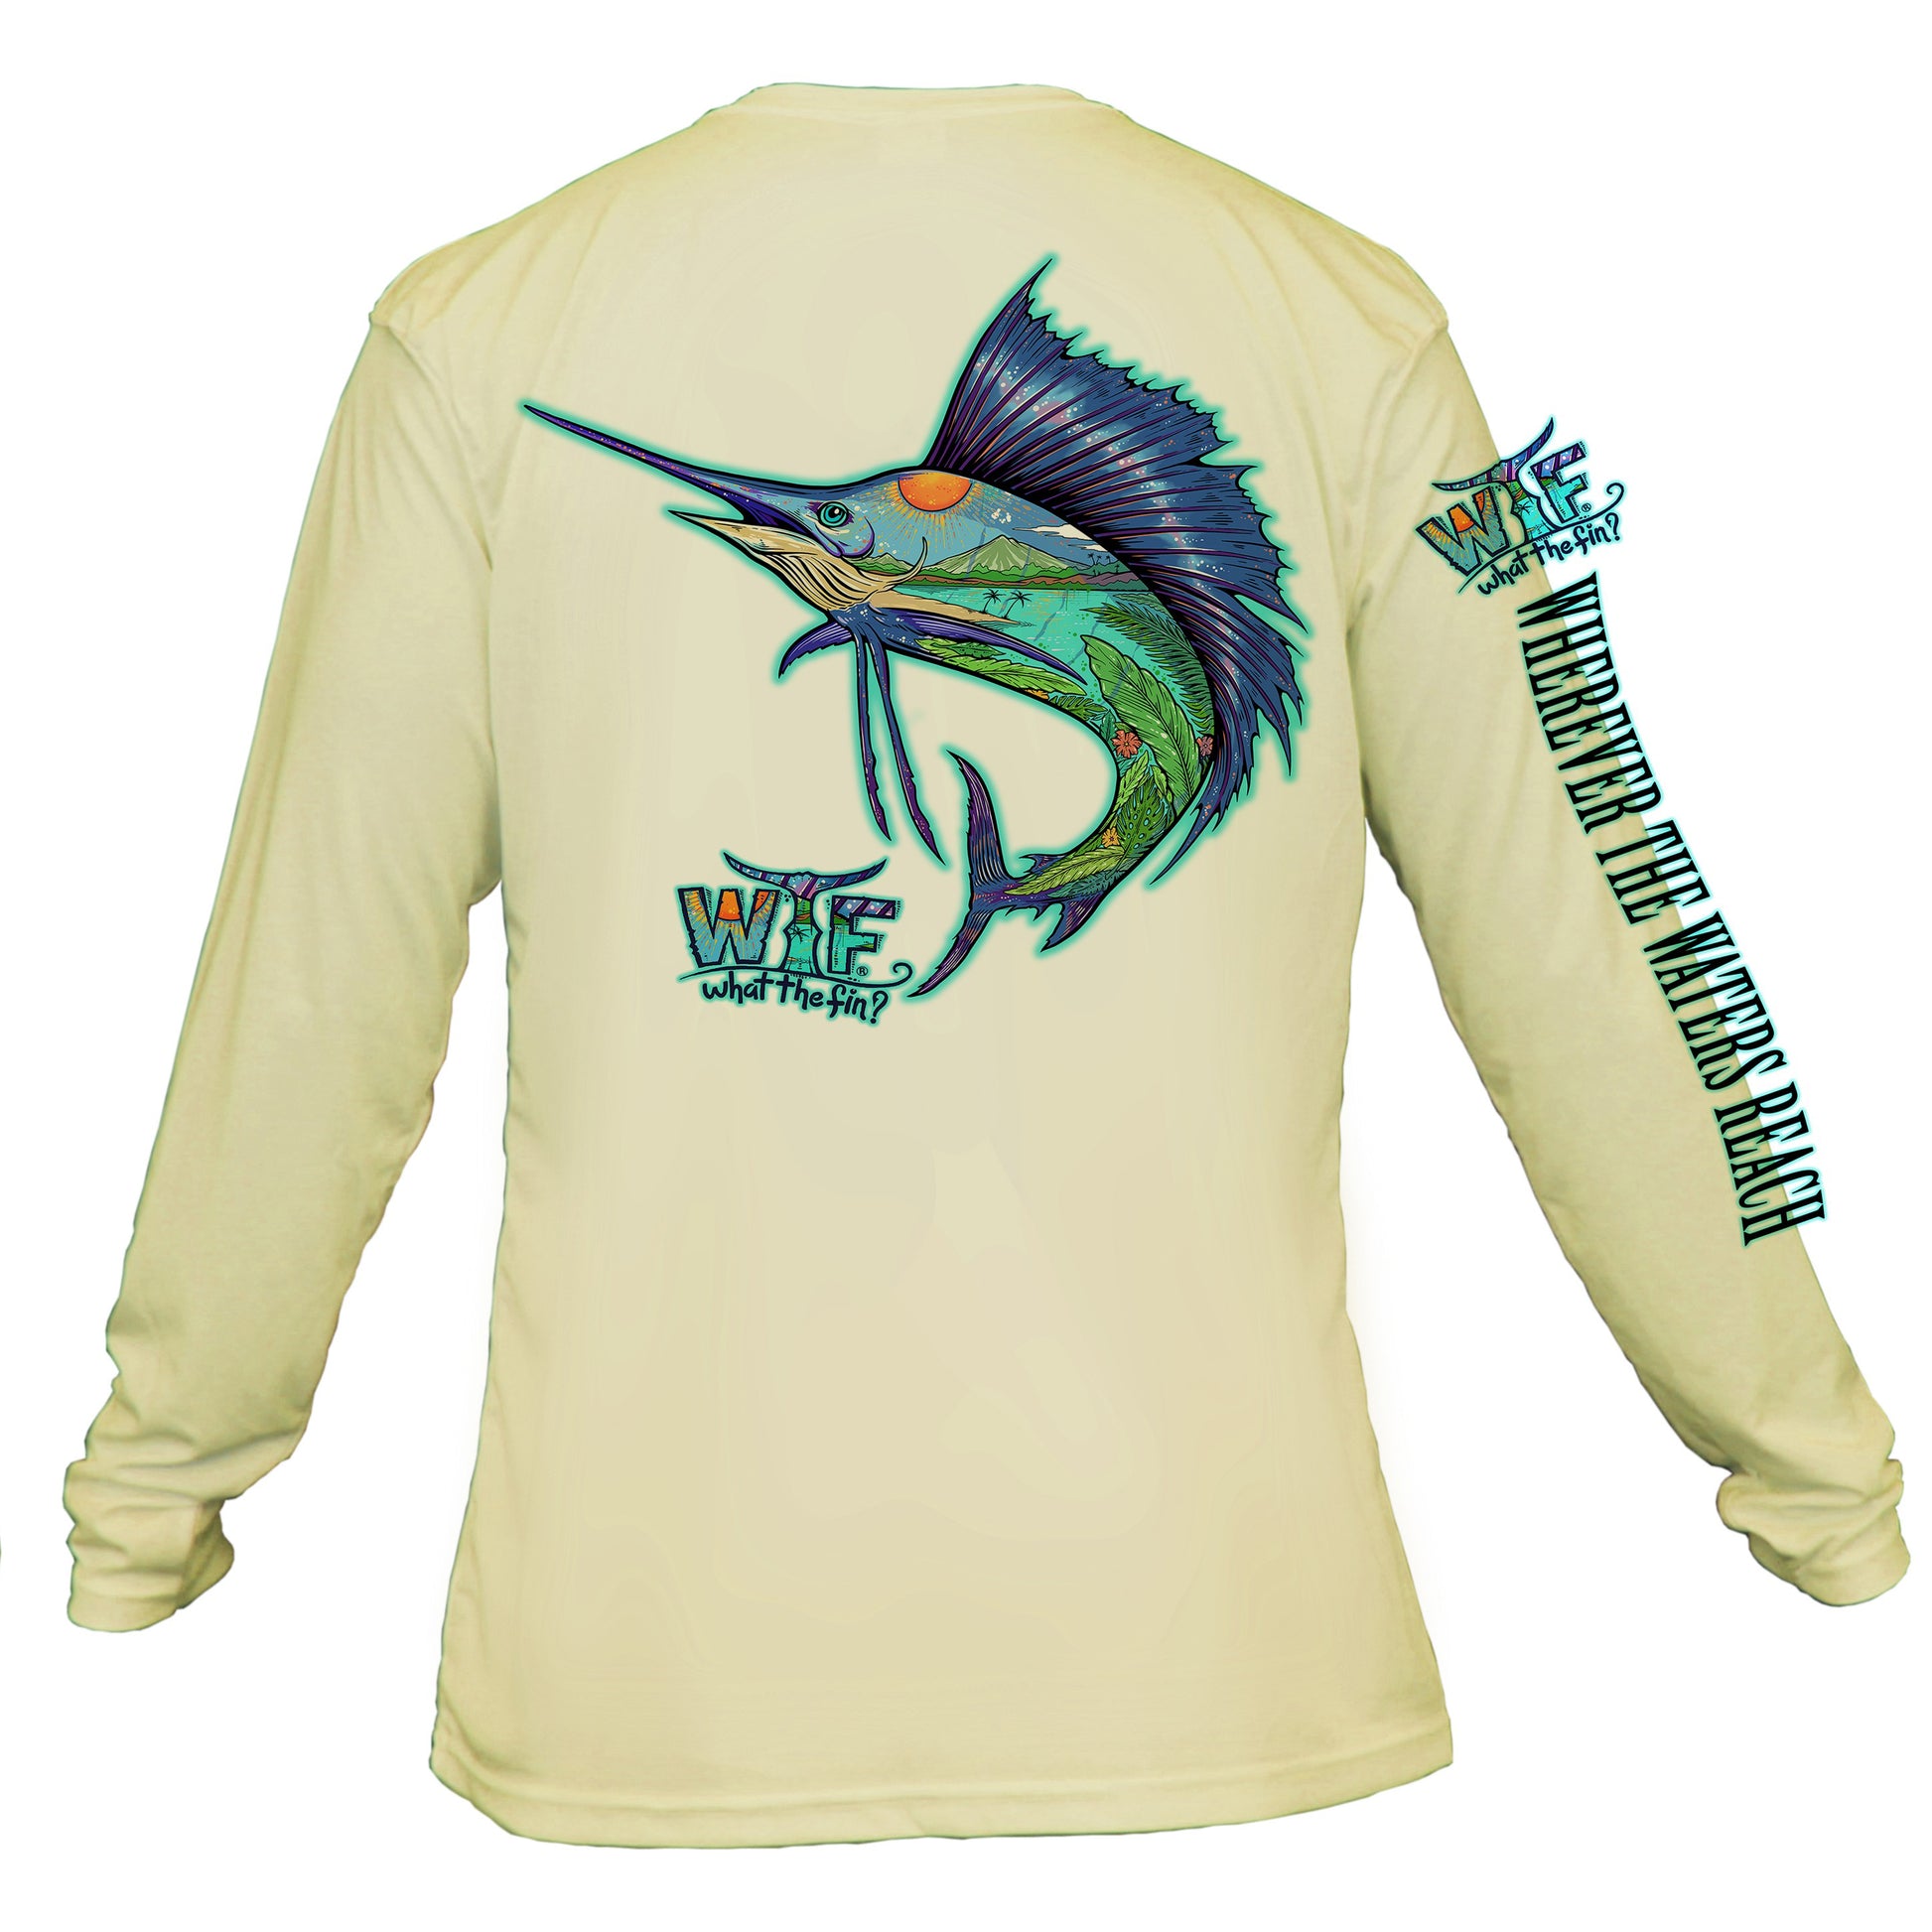 Women's Performance Fishing Shirt Long Sleeve UPF 50+ (Sailfish), M